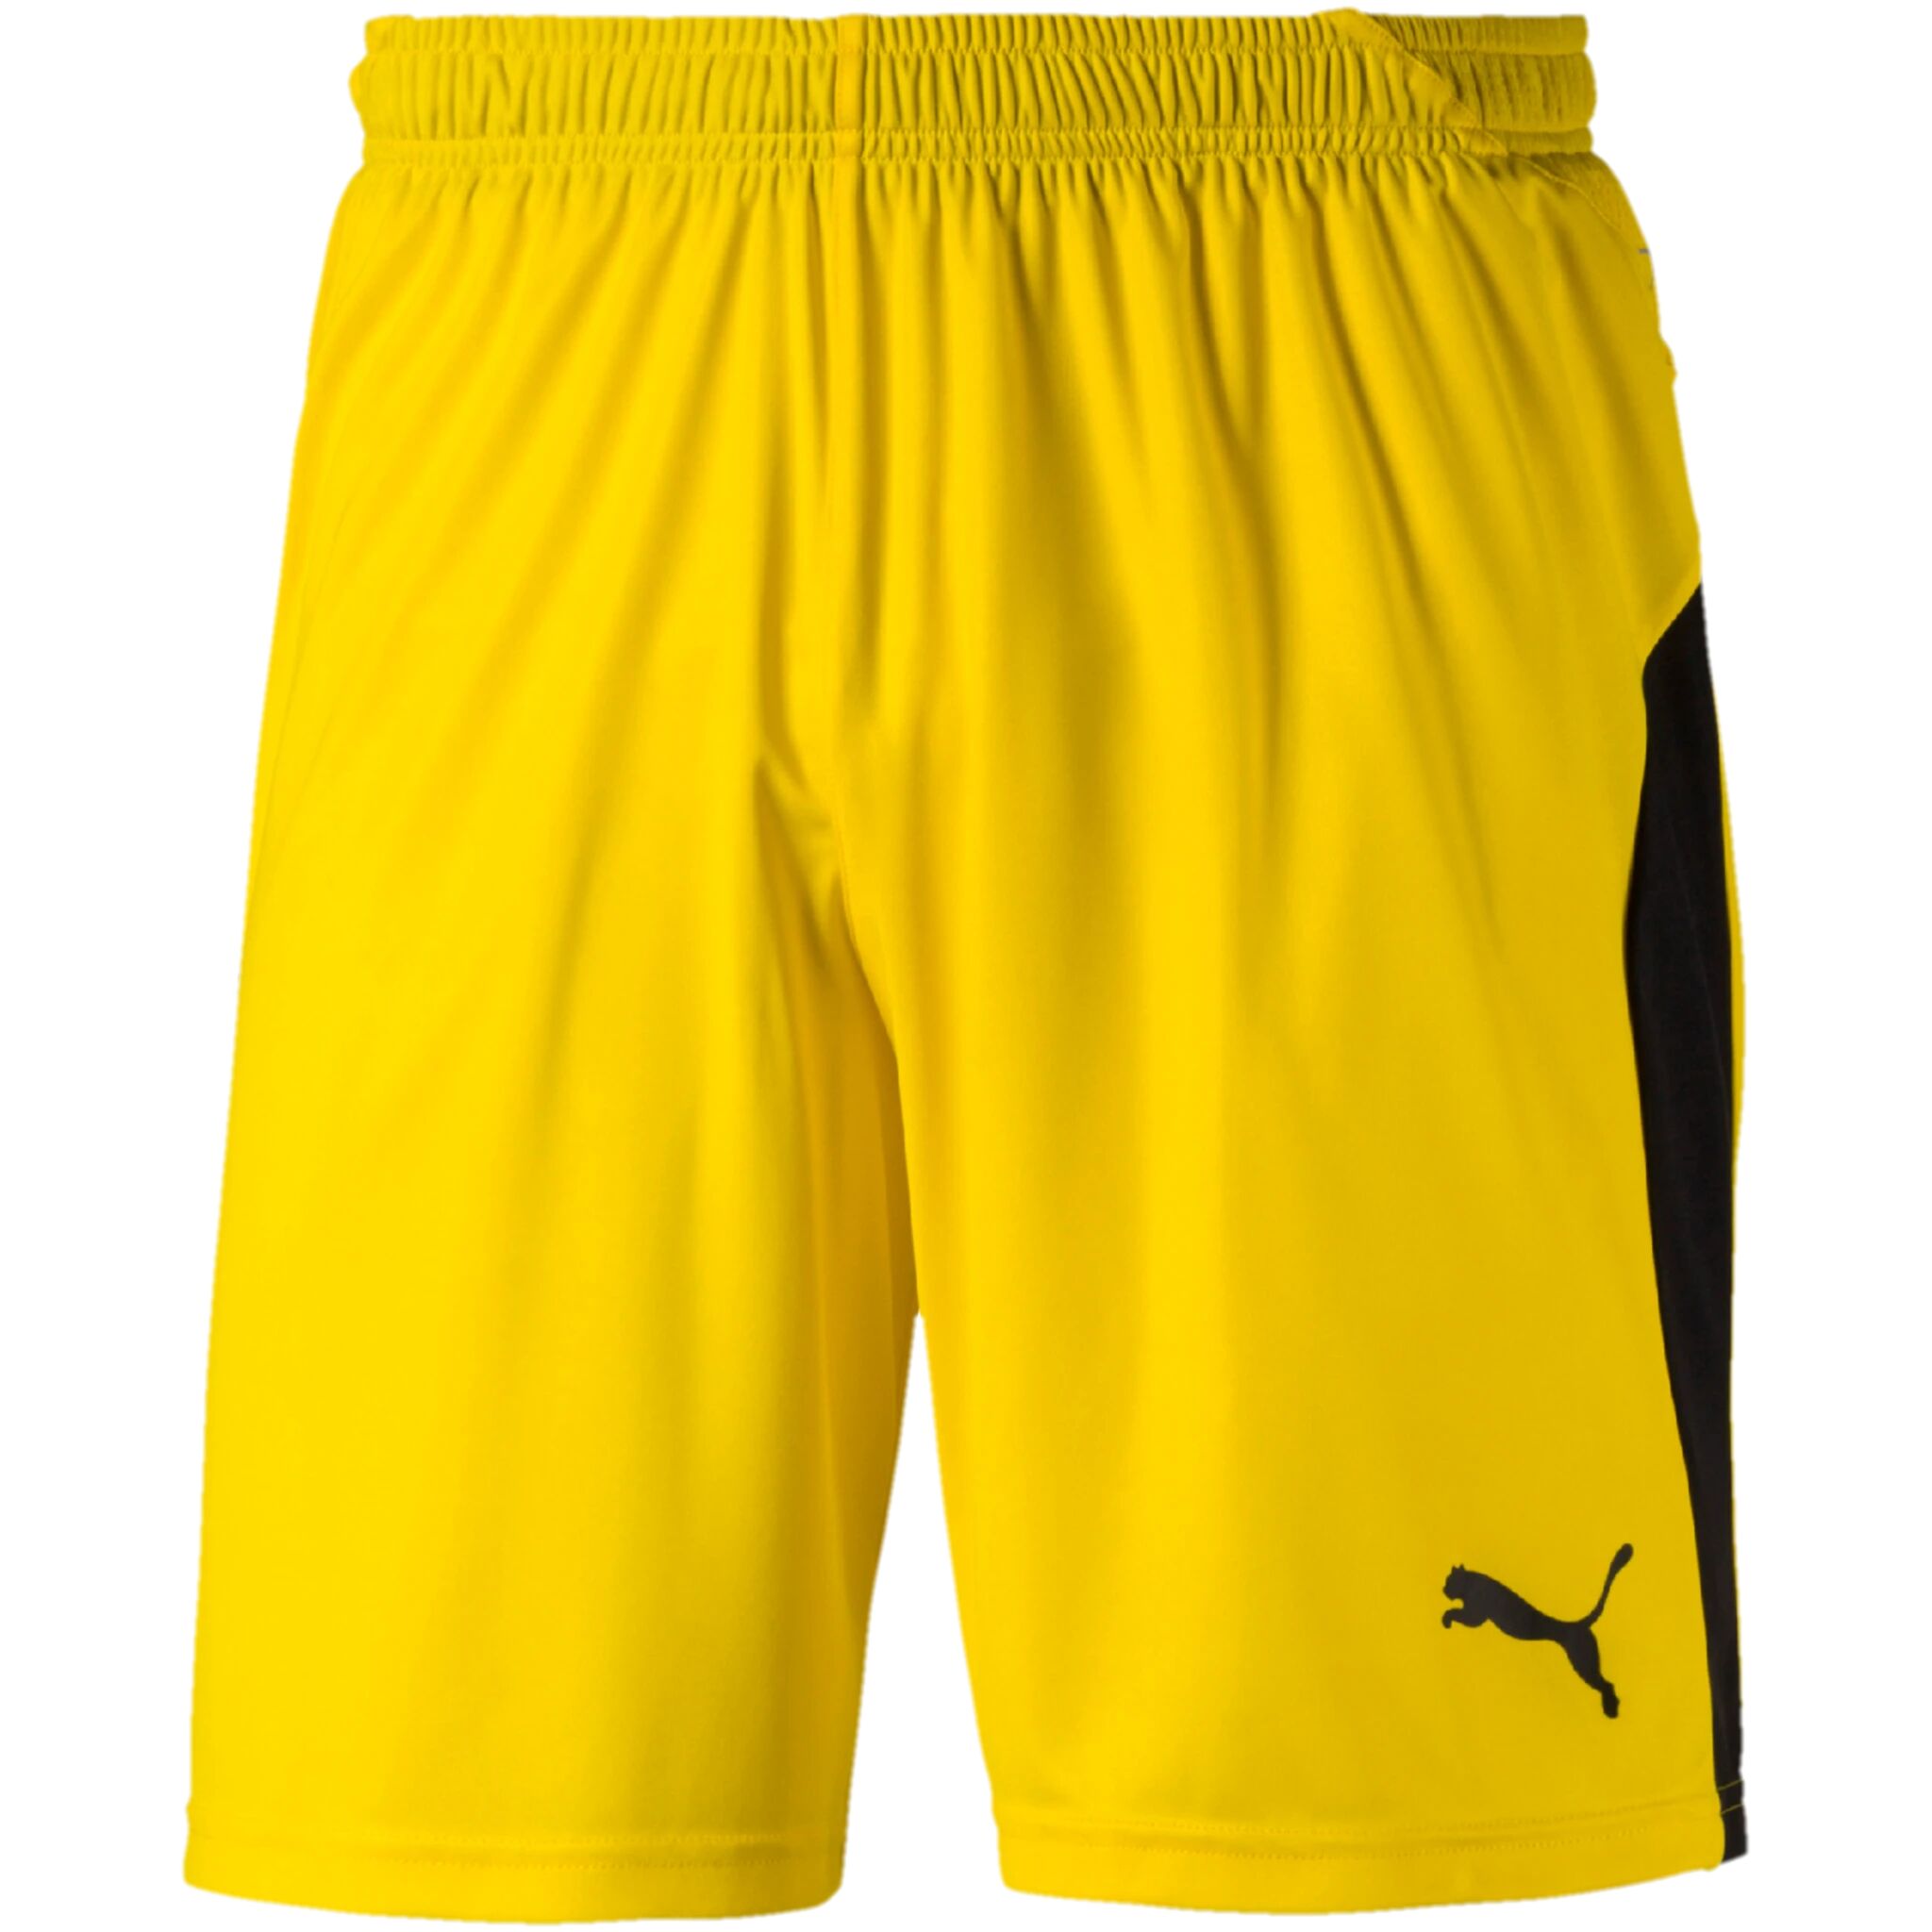 Puma LIGA Shorts with Brief, fotballshorts senior L Cyber Yellow-Puma Bl